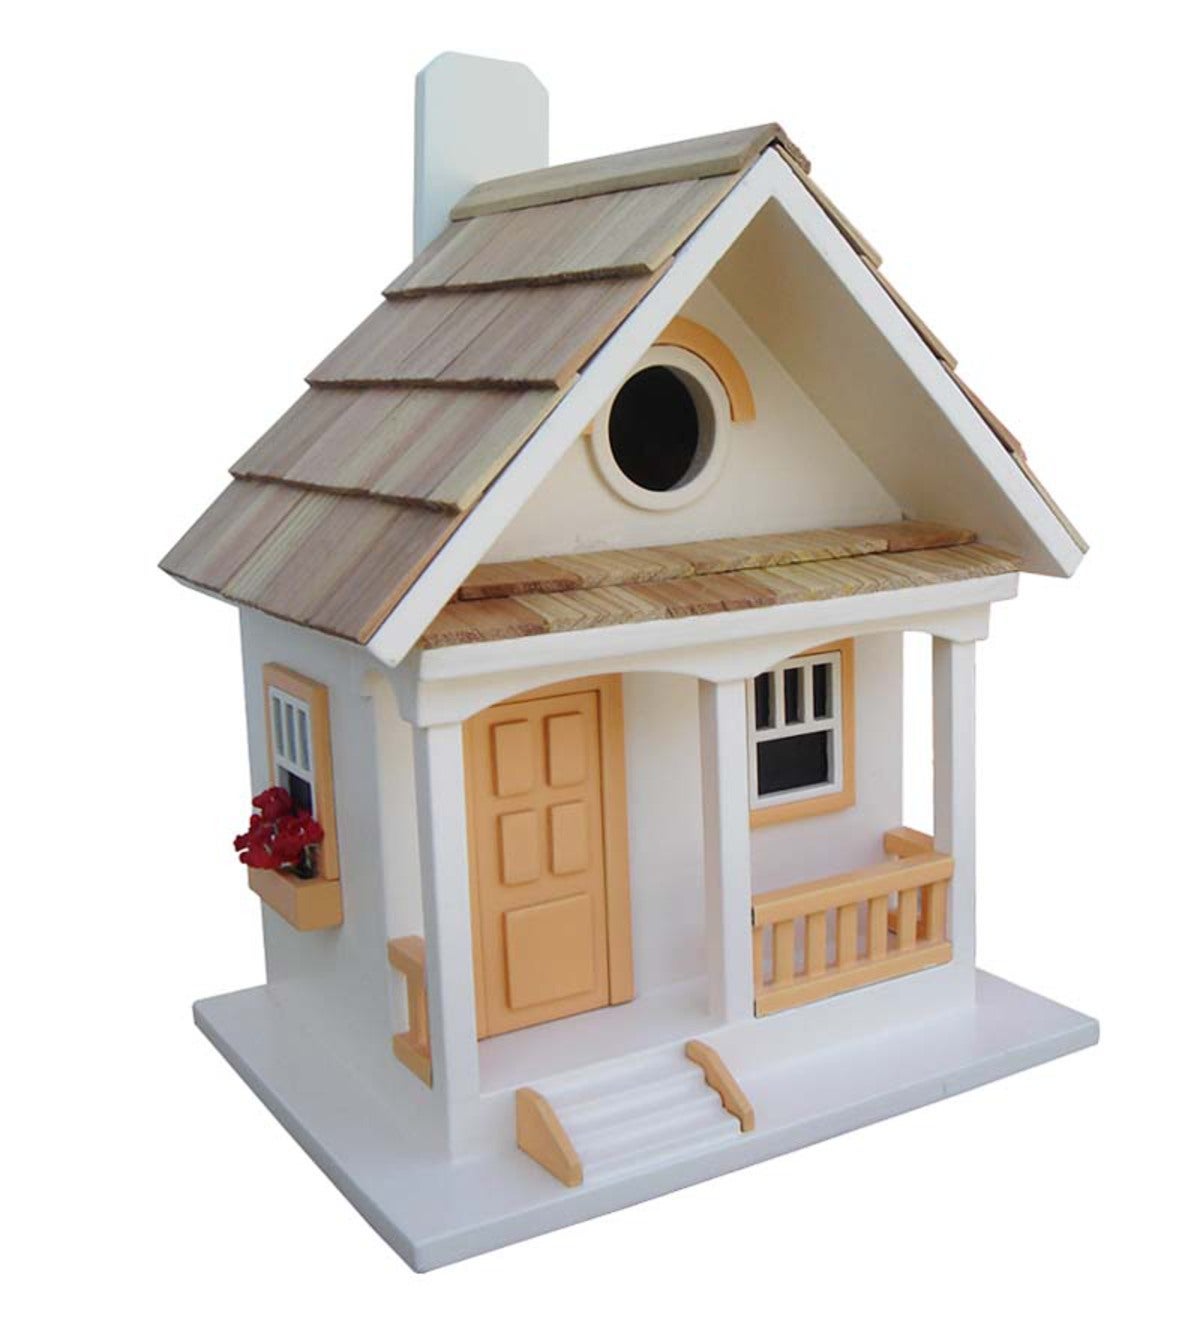 Wood Cottage Birdhouse with Flowerboxes - Peaches & Cream Orange